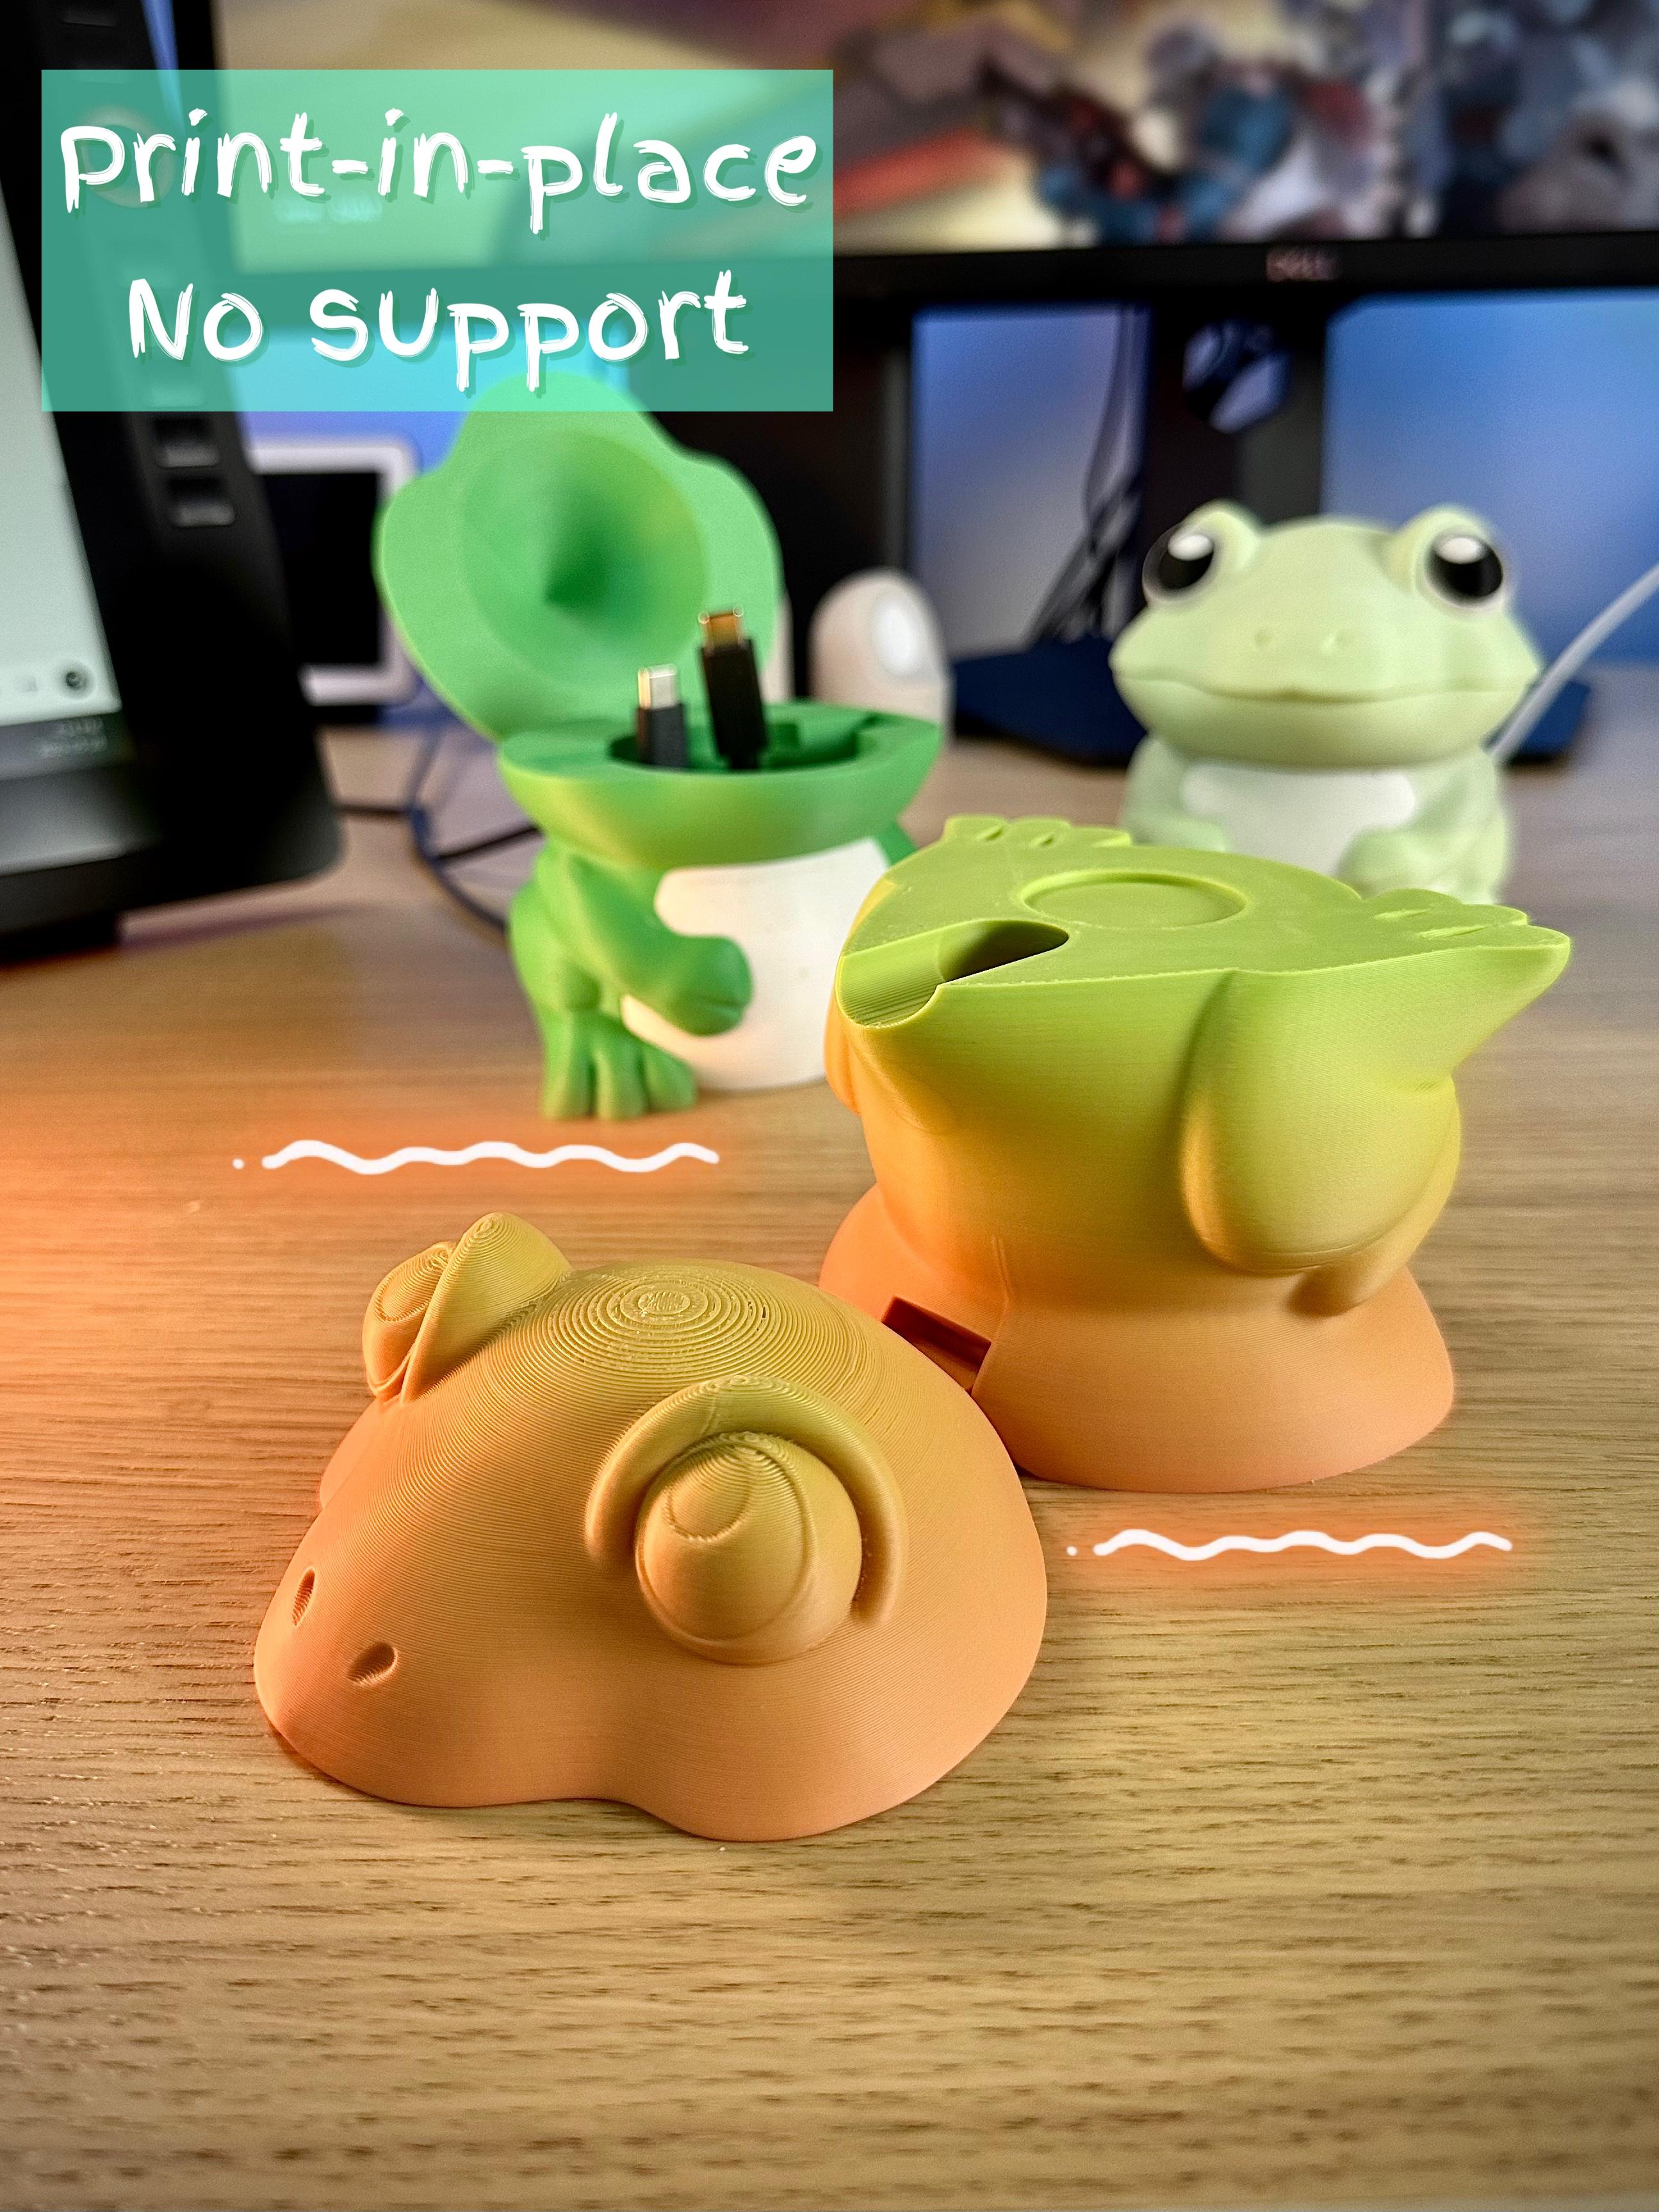 Frog Cable Holder - Holoprops 3d model